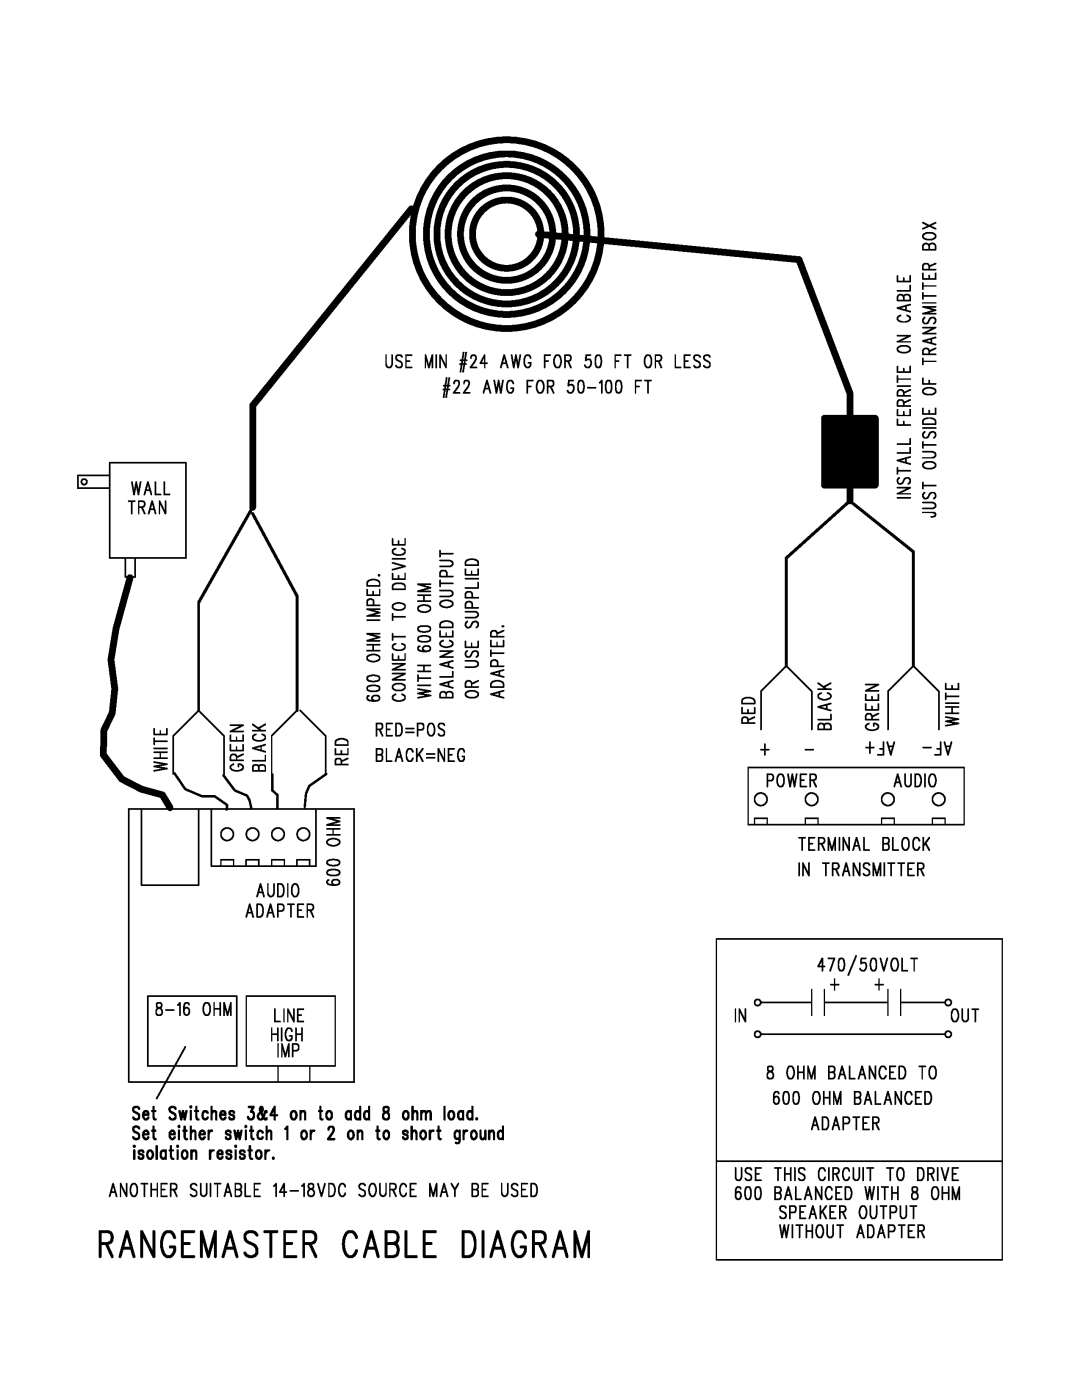 Hamilton Electronics AM1000 installation instructions 